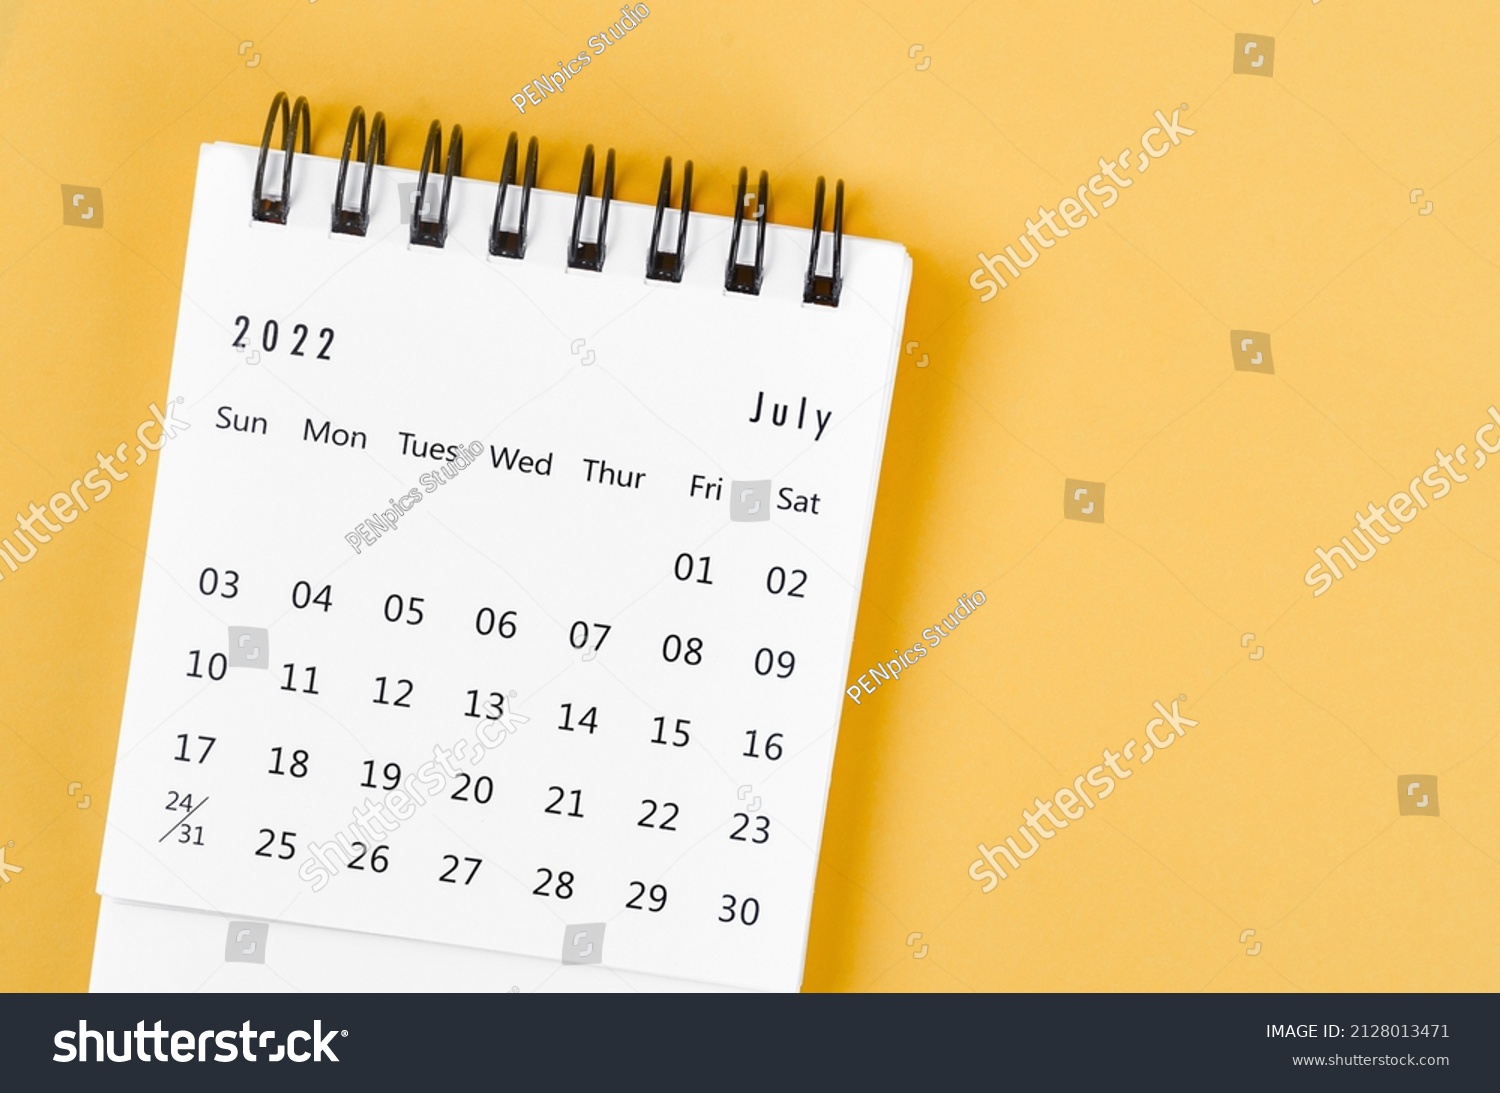 The July 2022 desk calendar on light yellow background. #2128013471